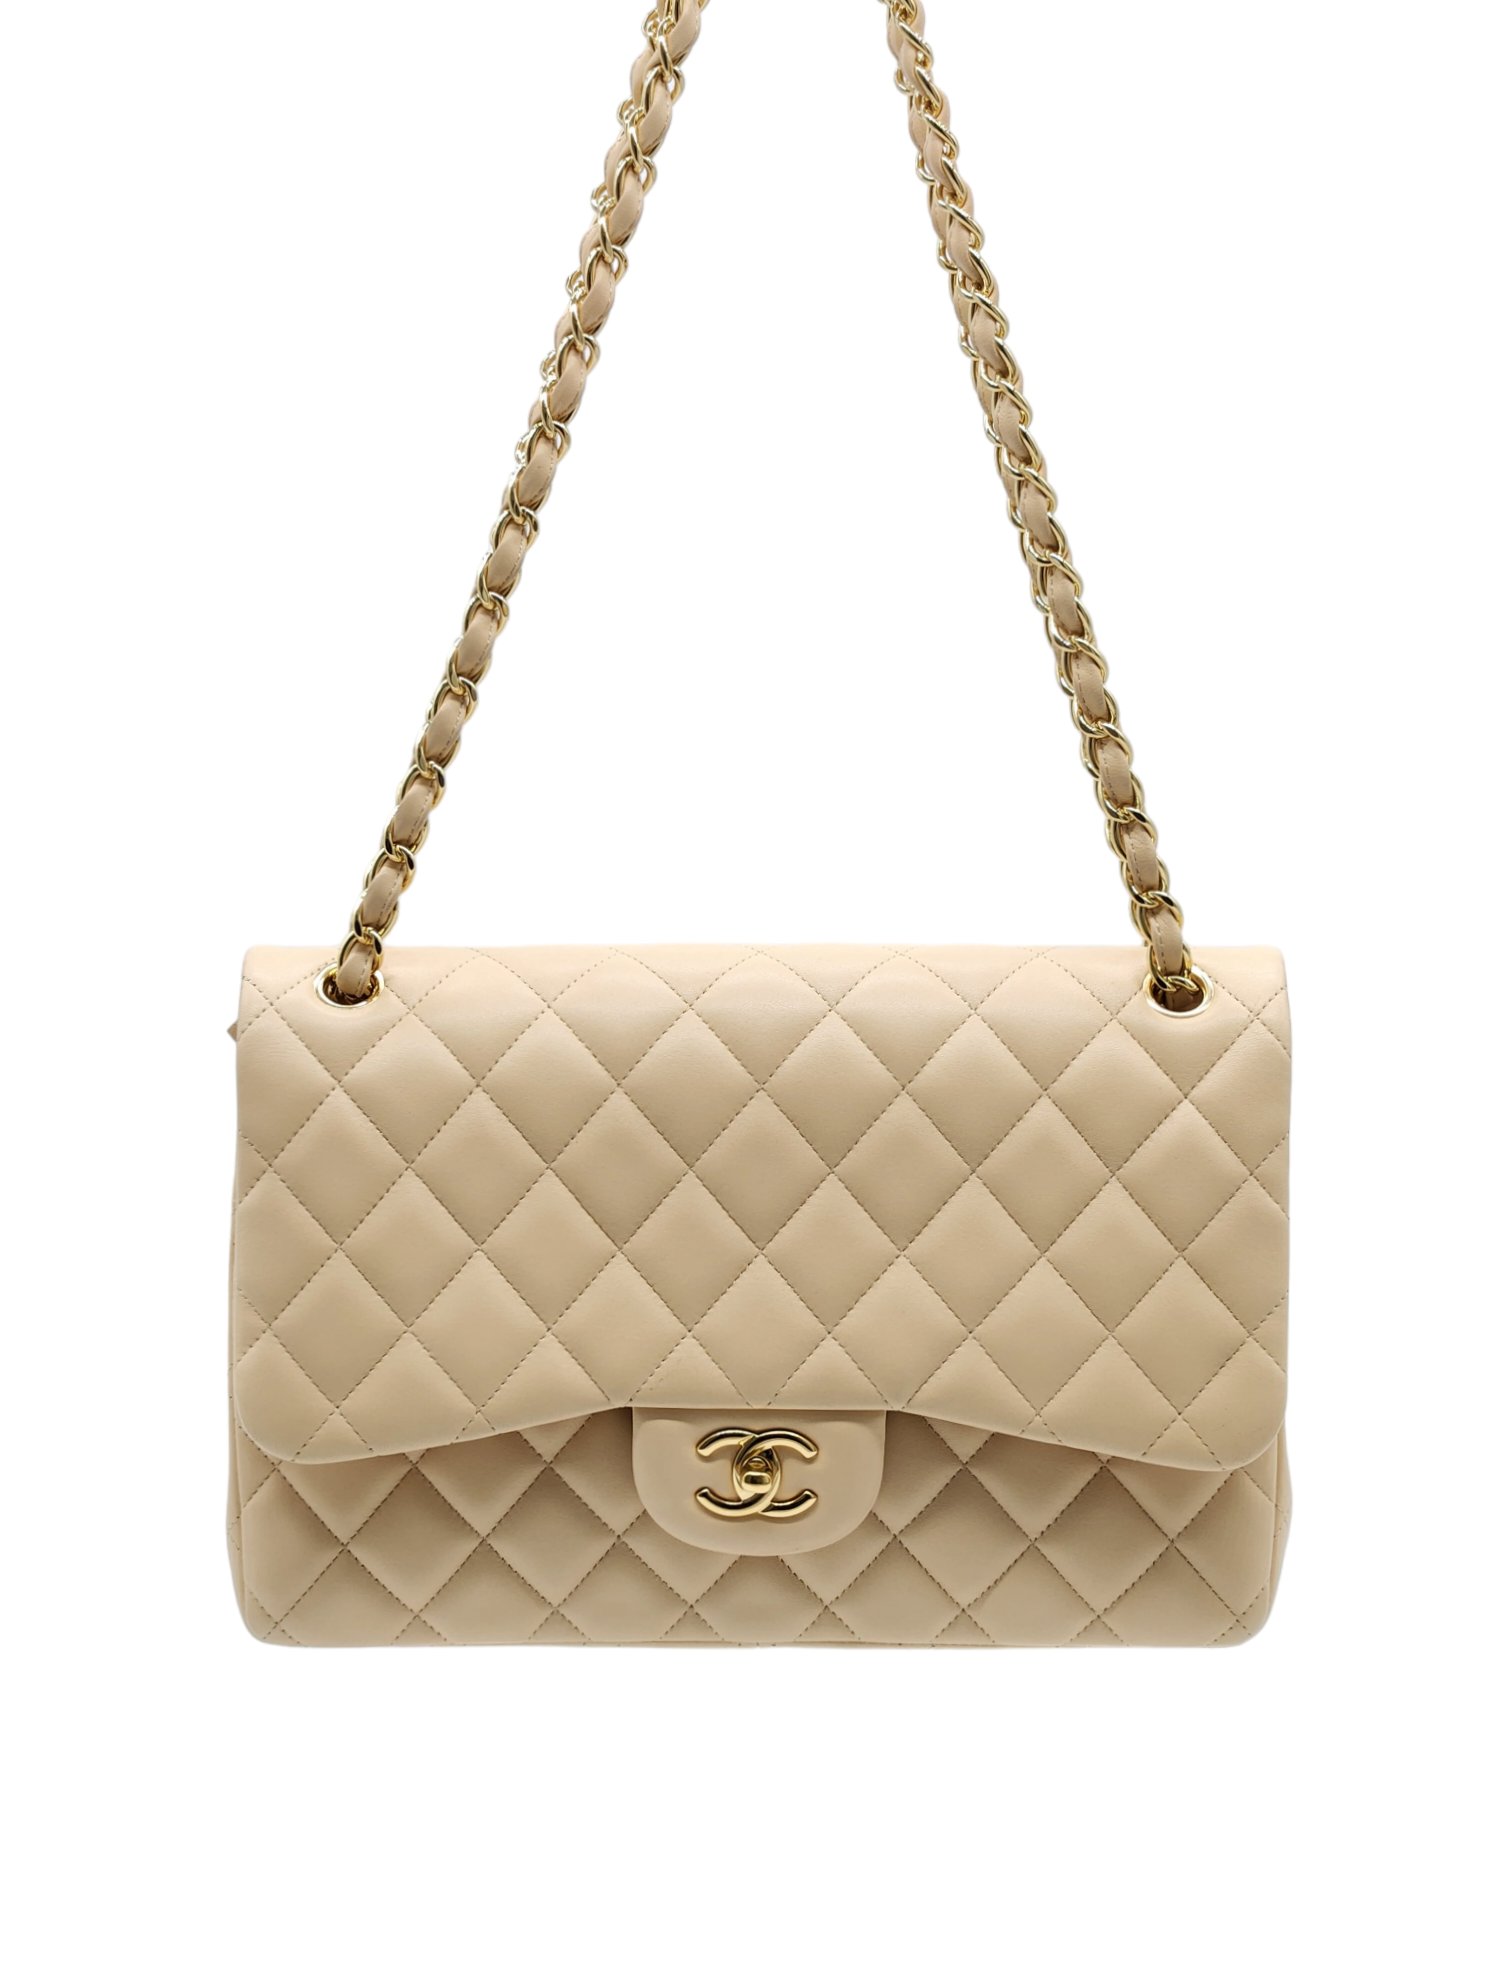 Chanel Beige Lambskin Gold CC Jumbo Classic Double Flap Bag